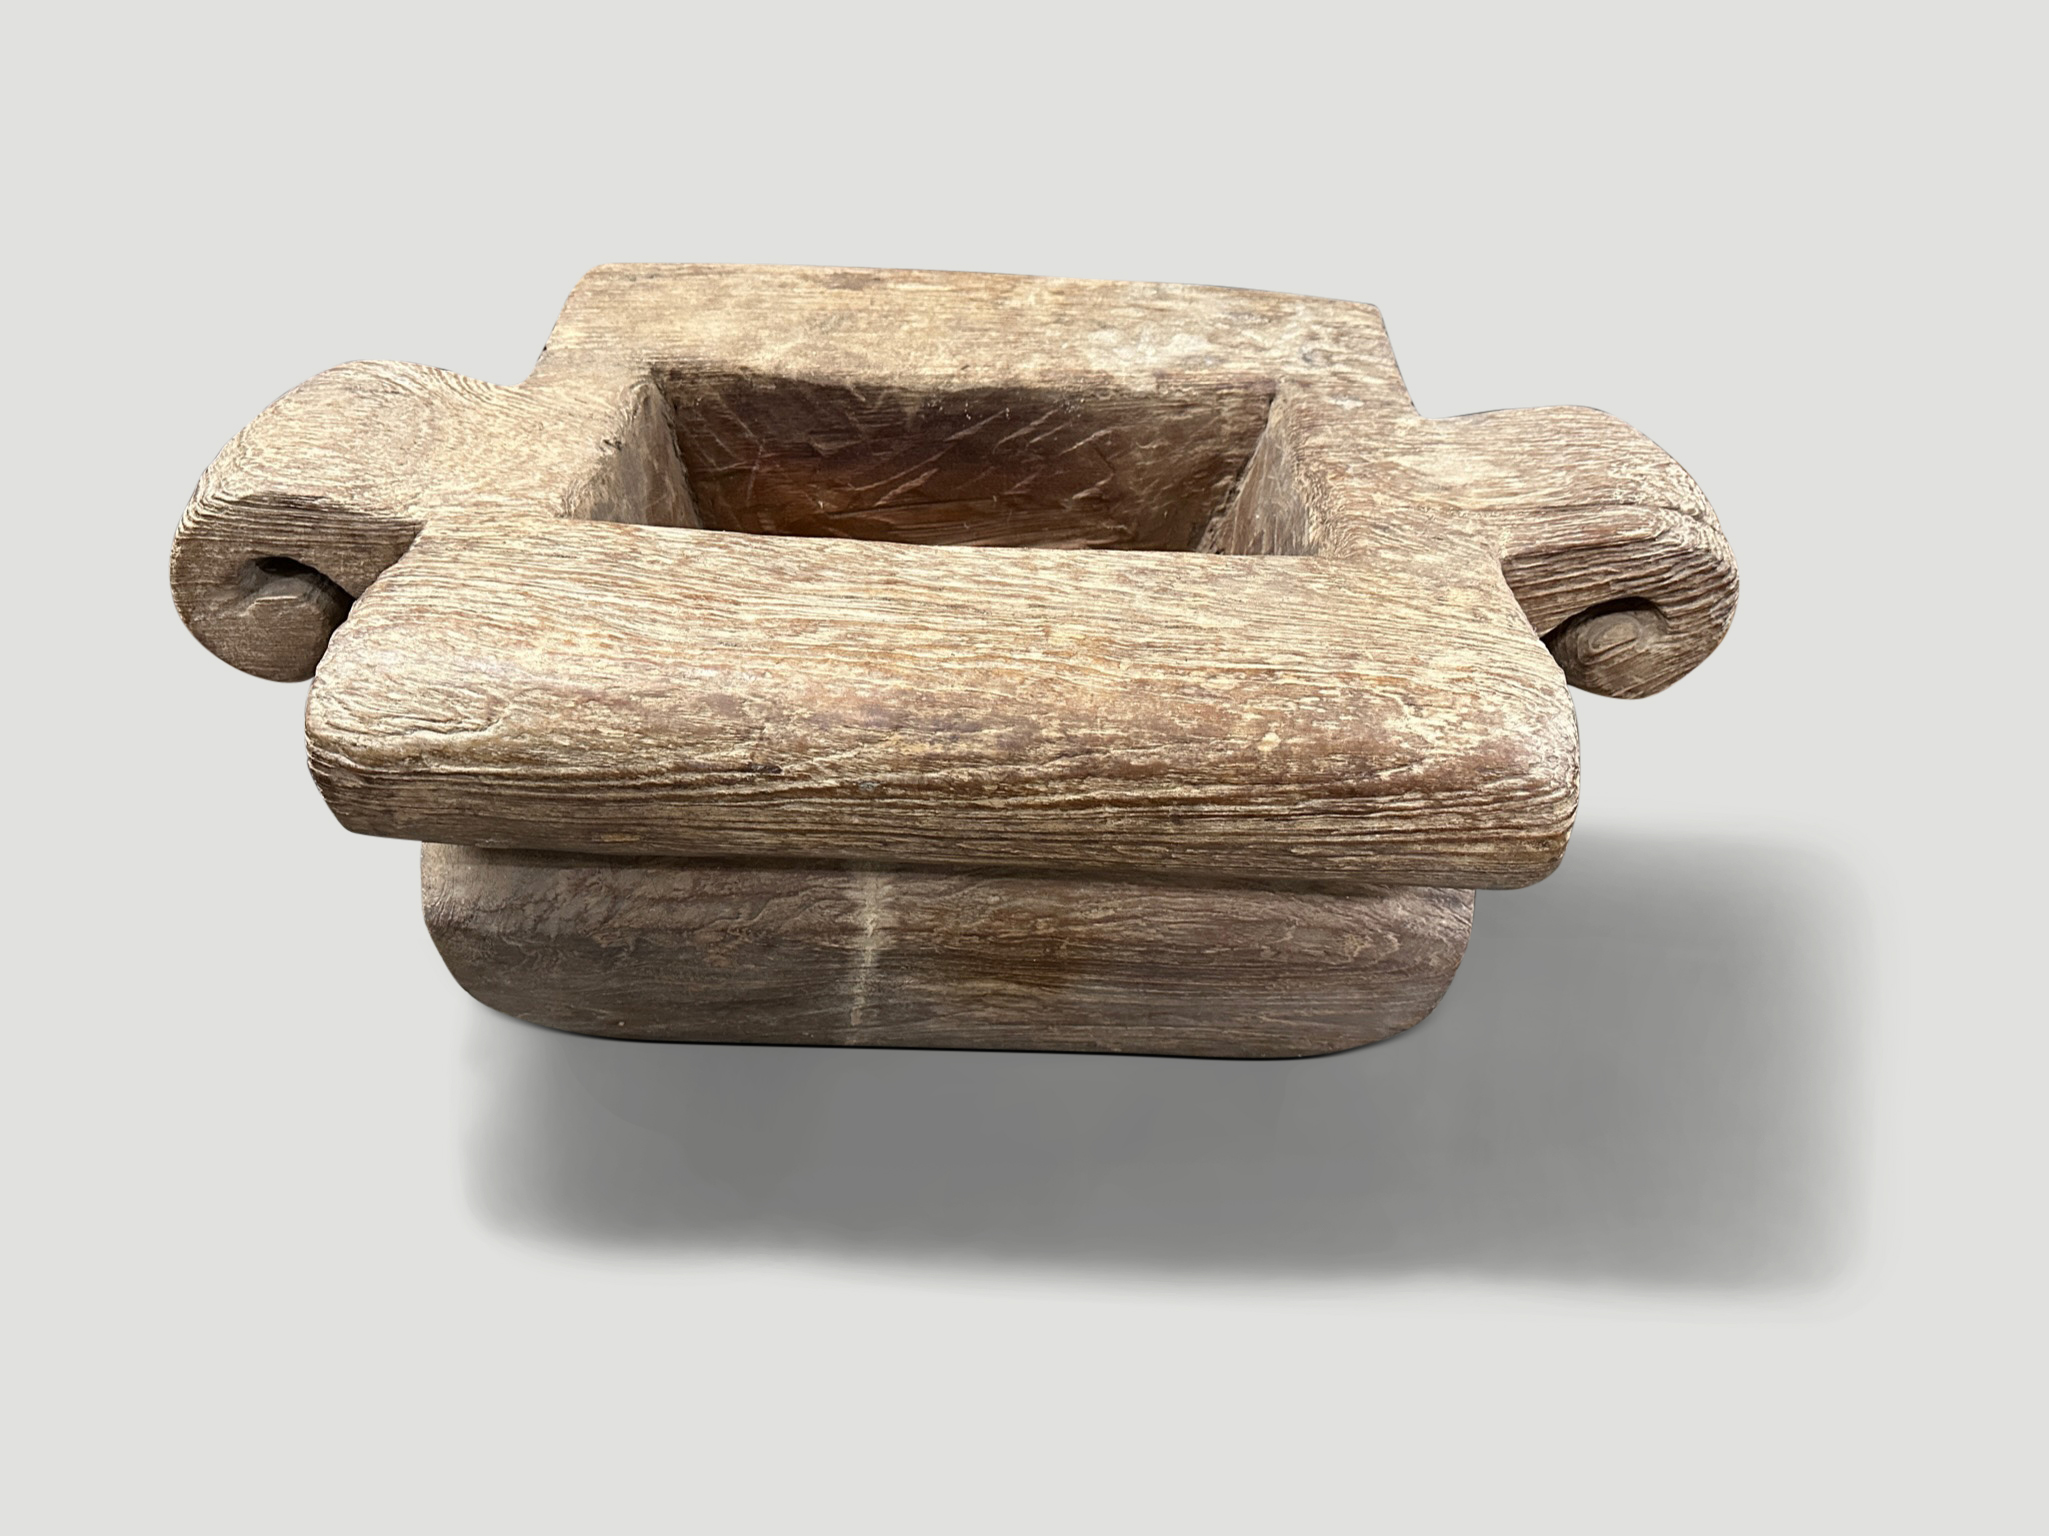 Century old teak wood hand carved vessel